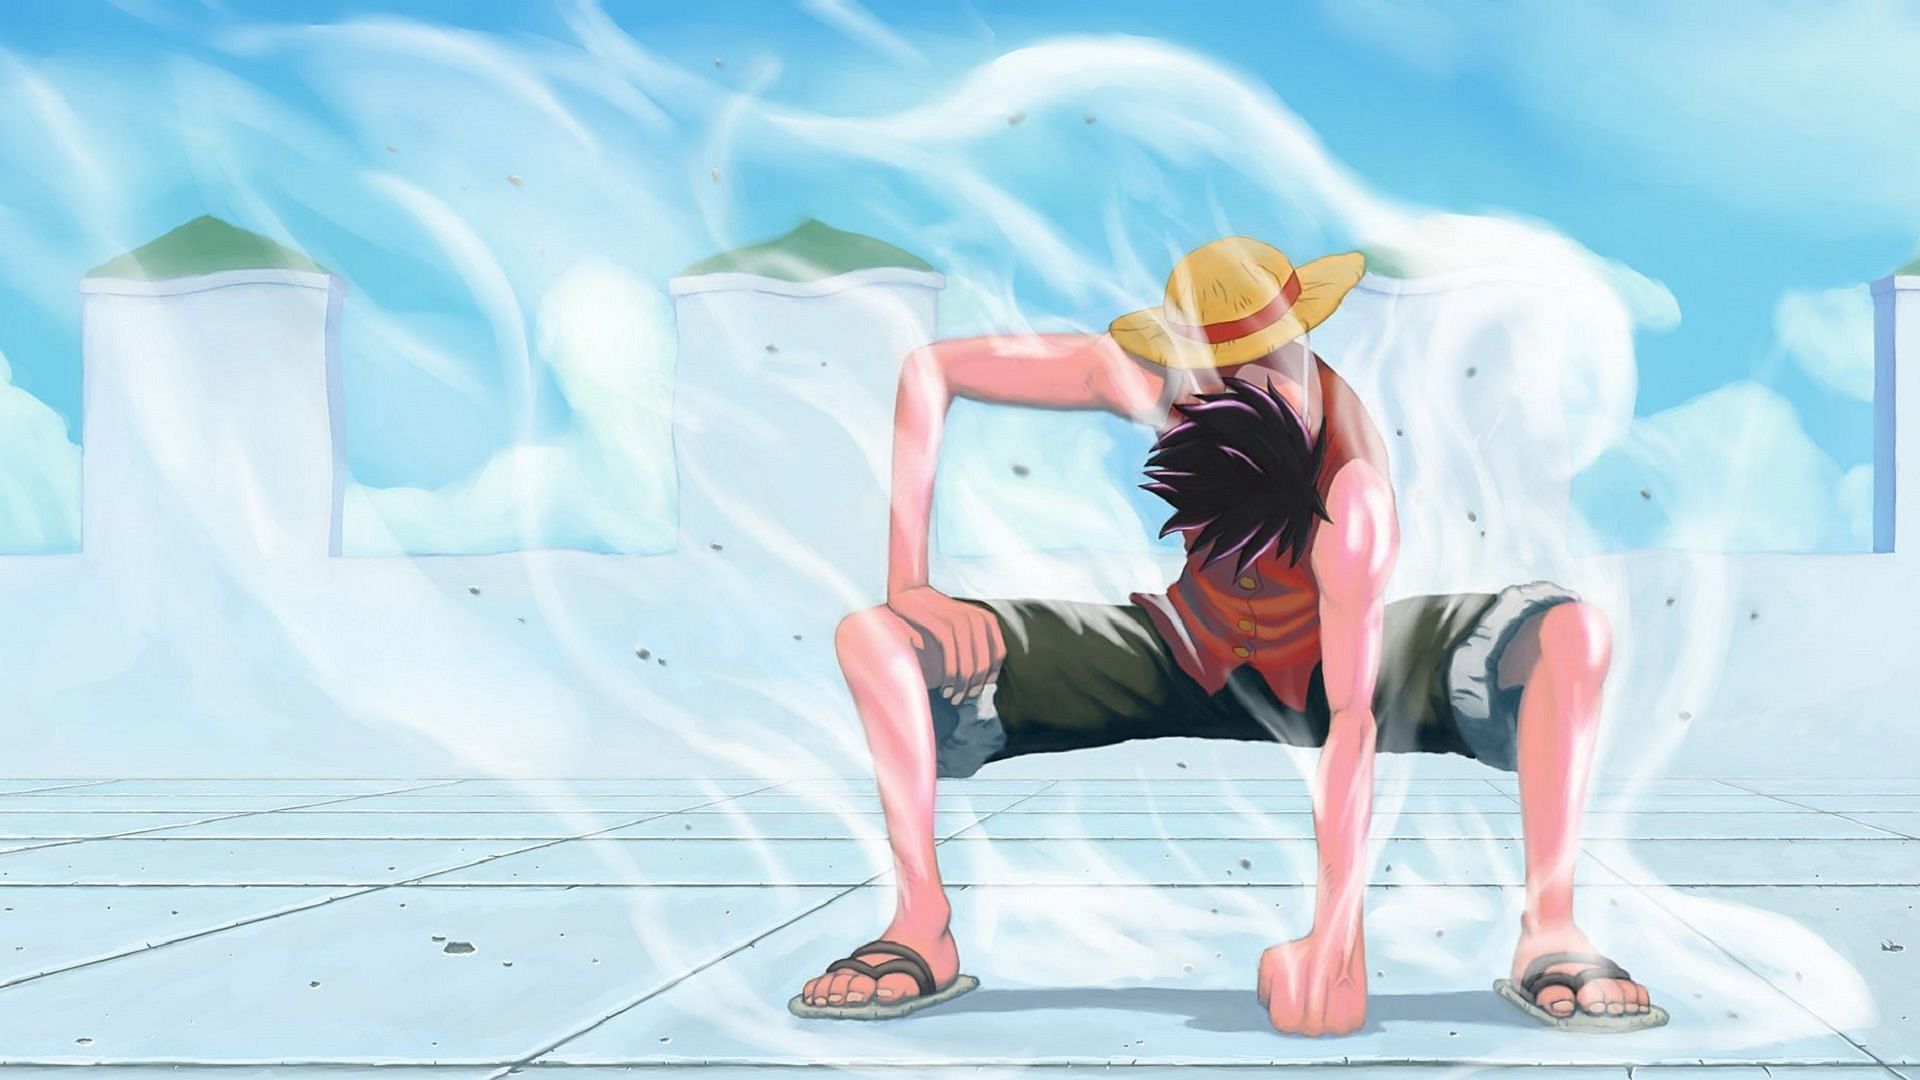 In Enies Lobby Luffy unleashed his Gear Two and Gear Three forms (Image via Eiichiro Oda/Shueisha, One Piece)